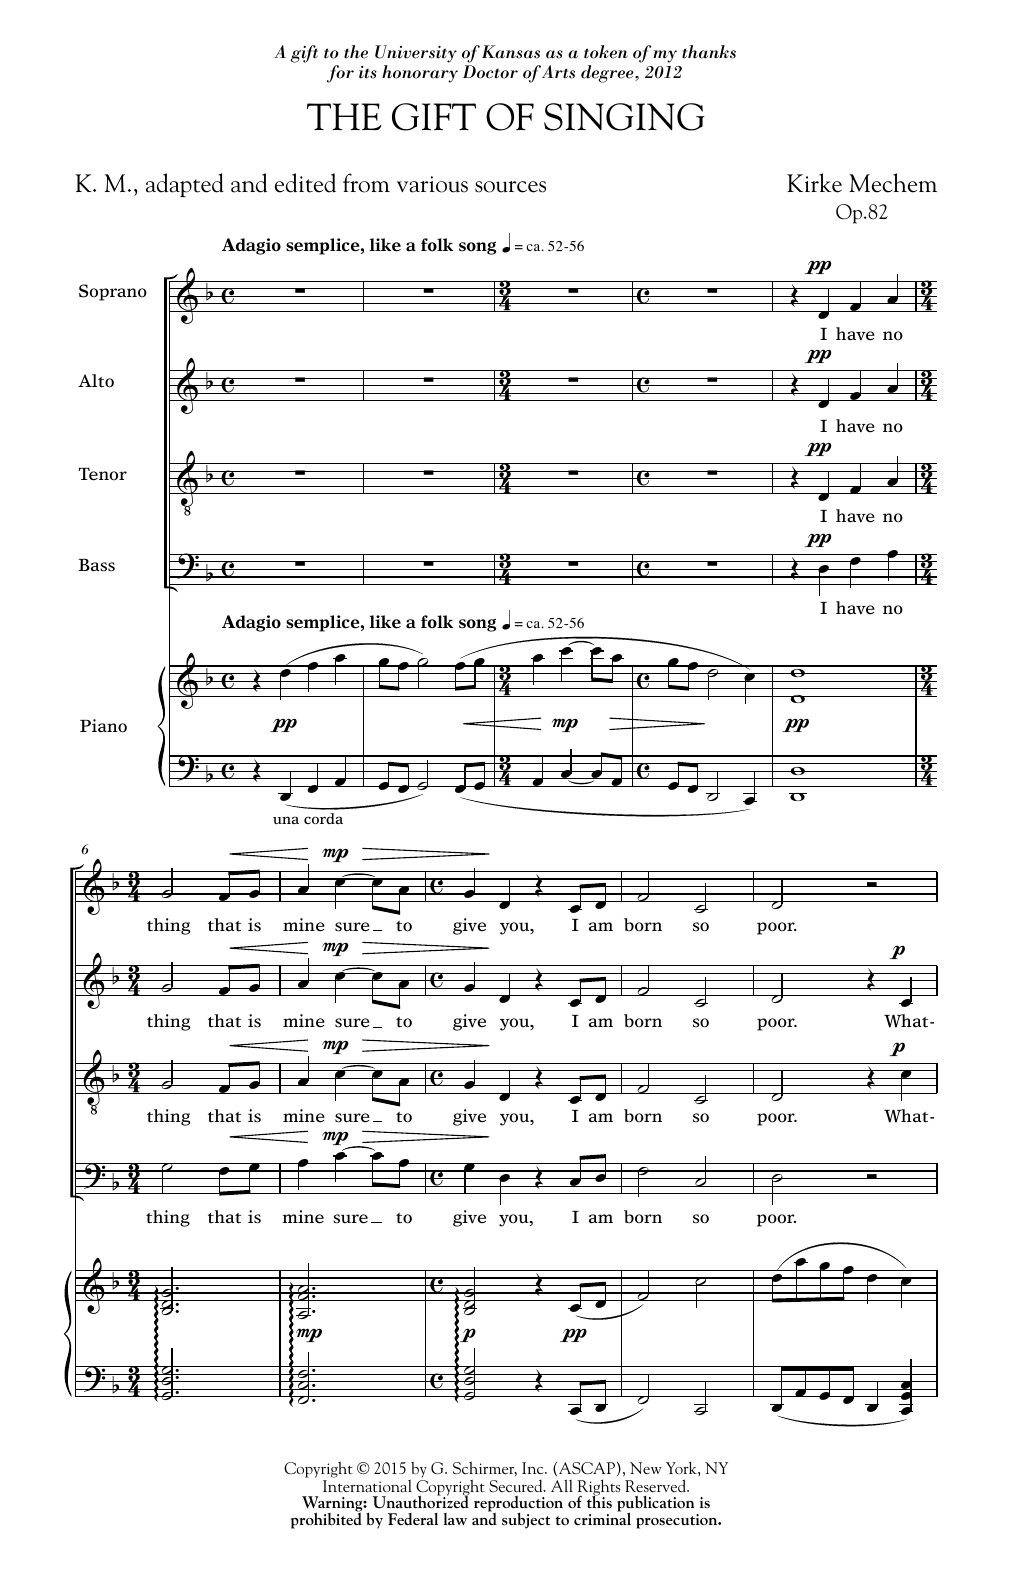 Kirke Mechem Gift Of Singing Sheet Music Notes & Chords for SATB - Download or Print PDF